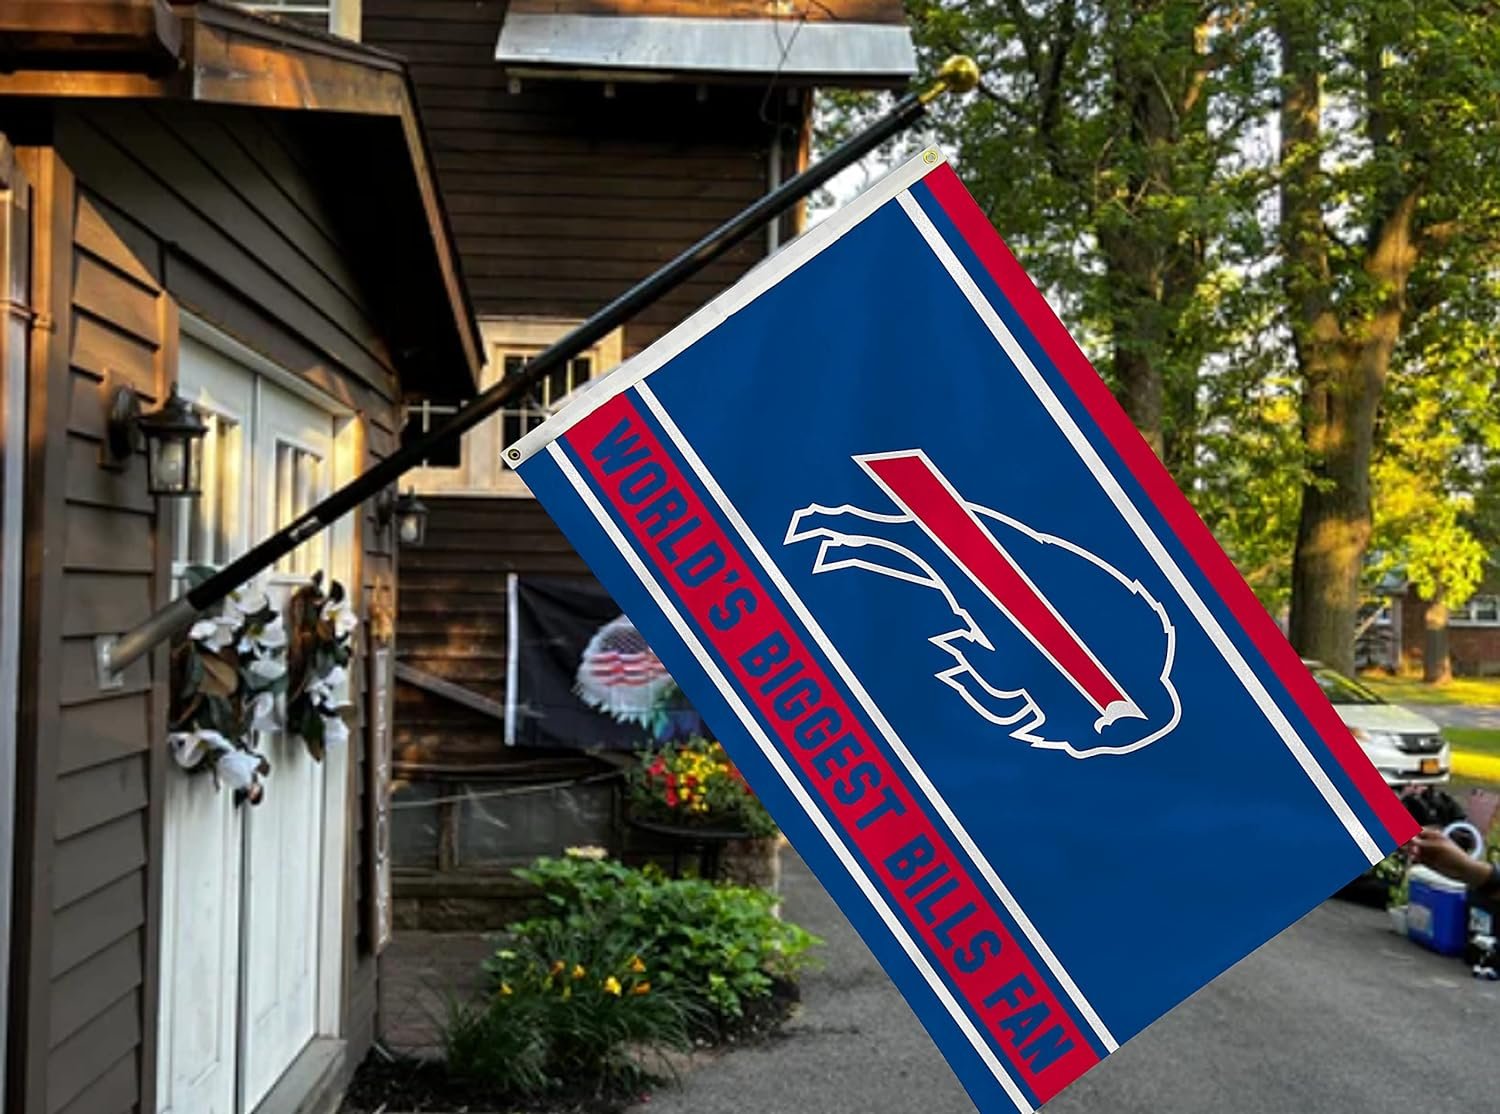 Buffalo Bills 3x5 Feet Flag Banner, World's Biggest Fan, Metal Grommets, Single Sided, Indoor or Outdoor Use